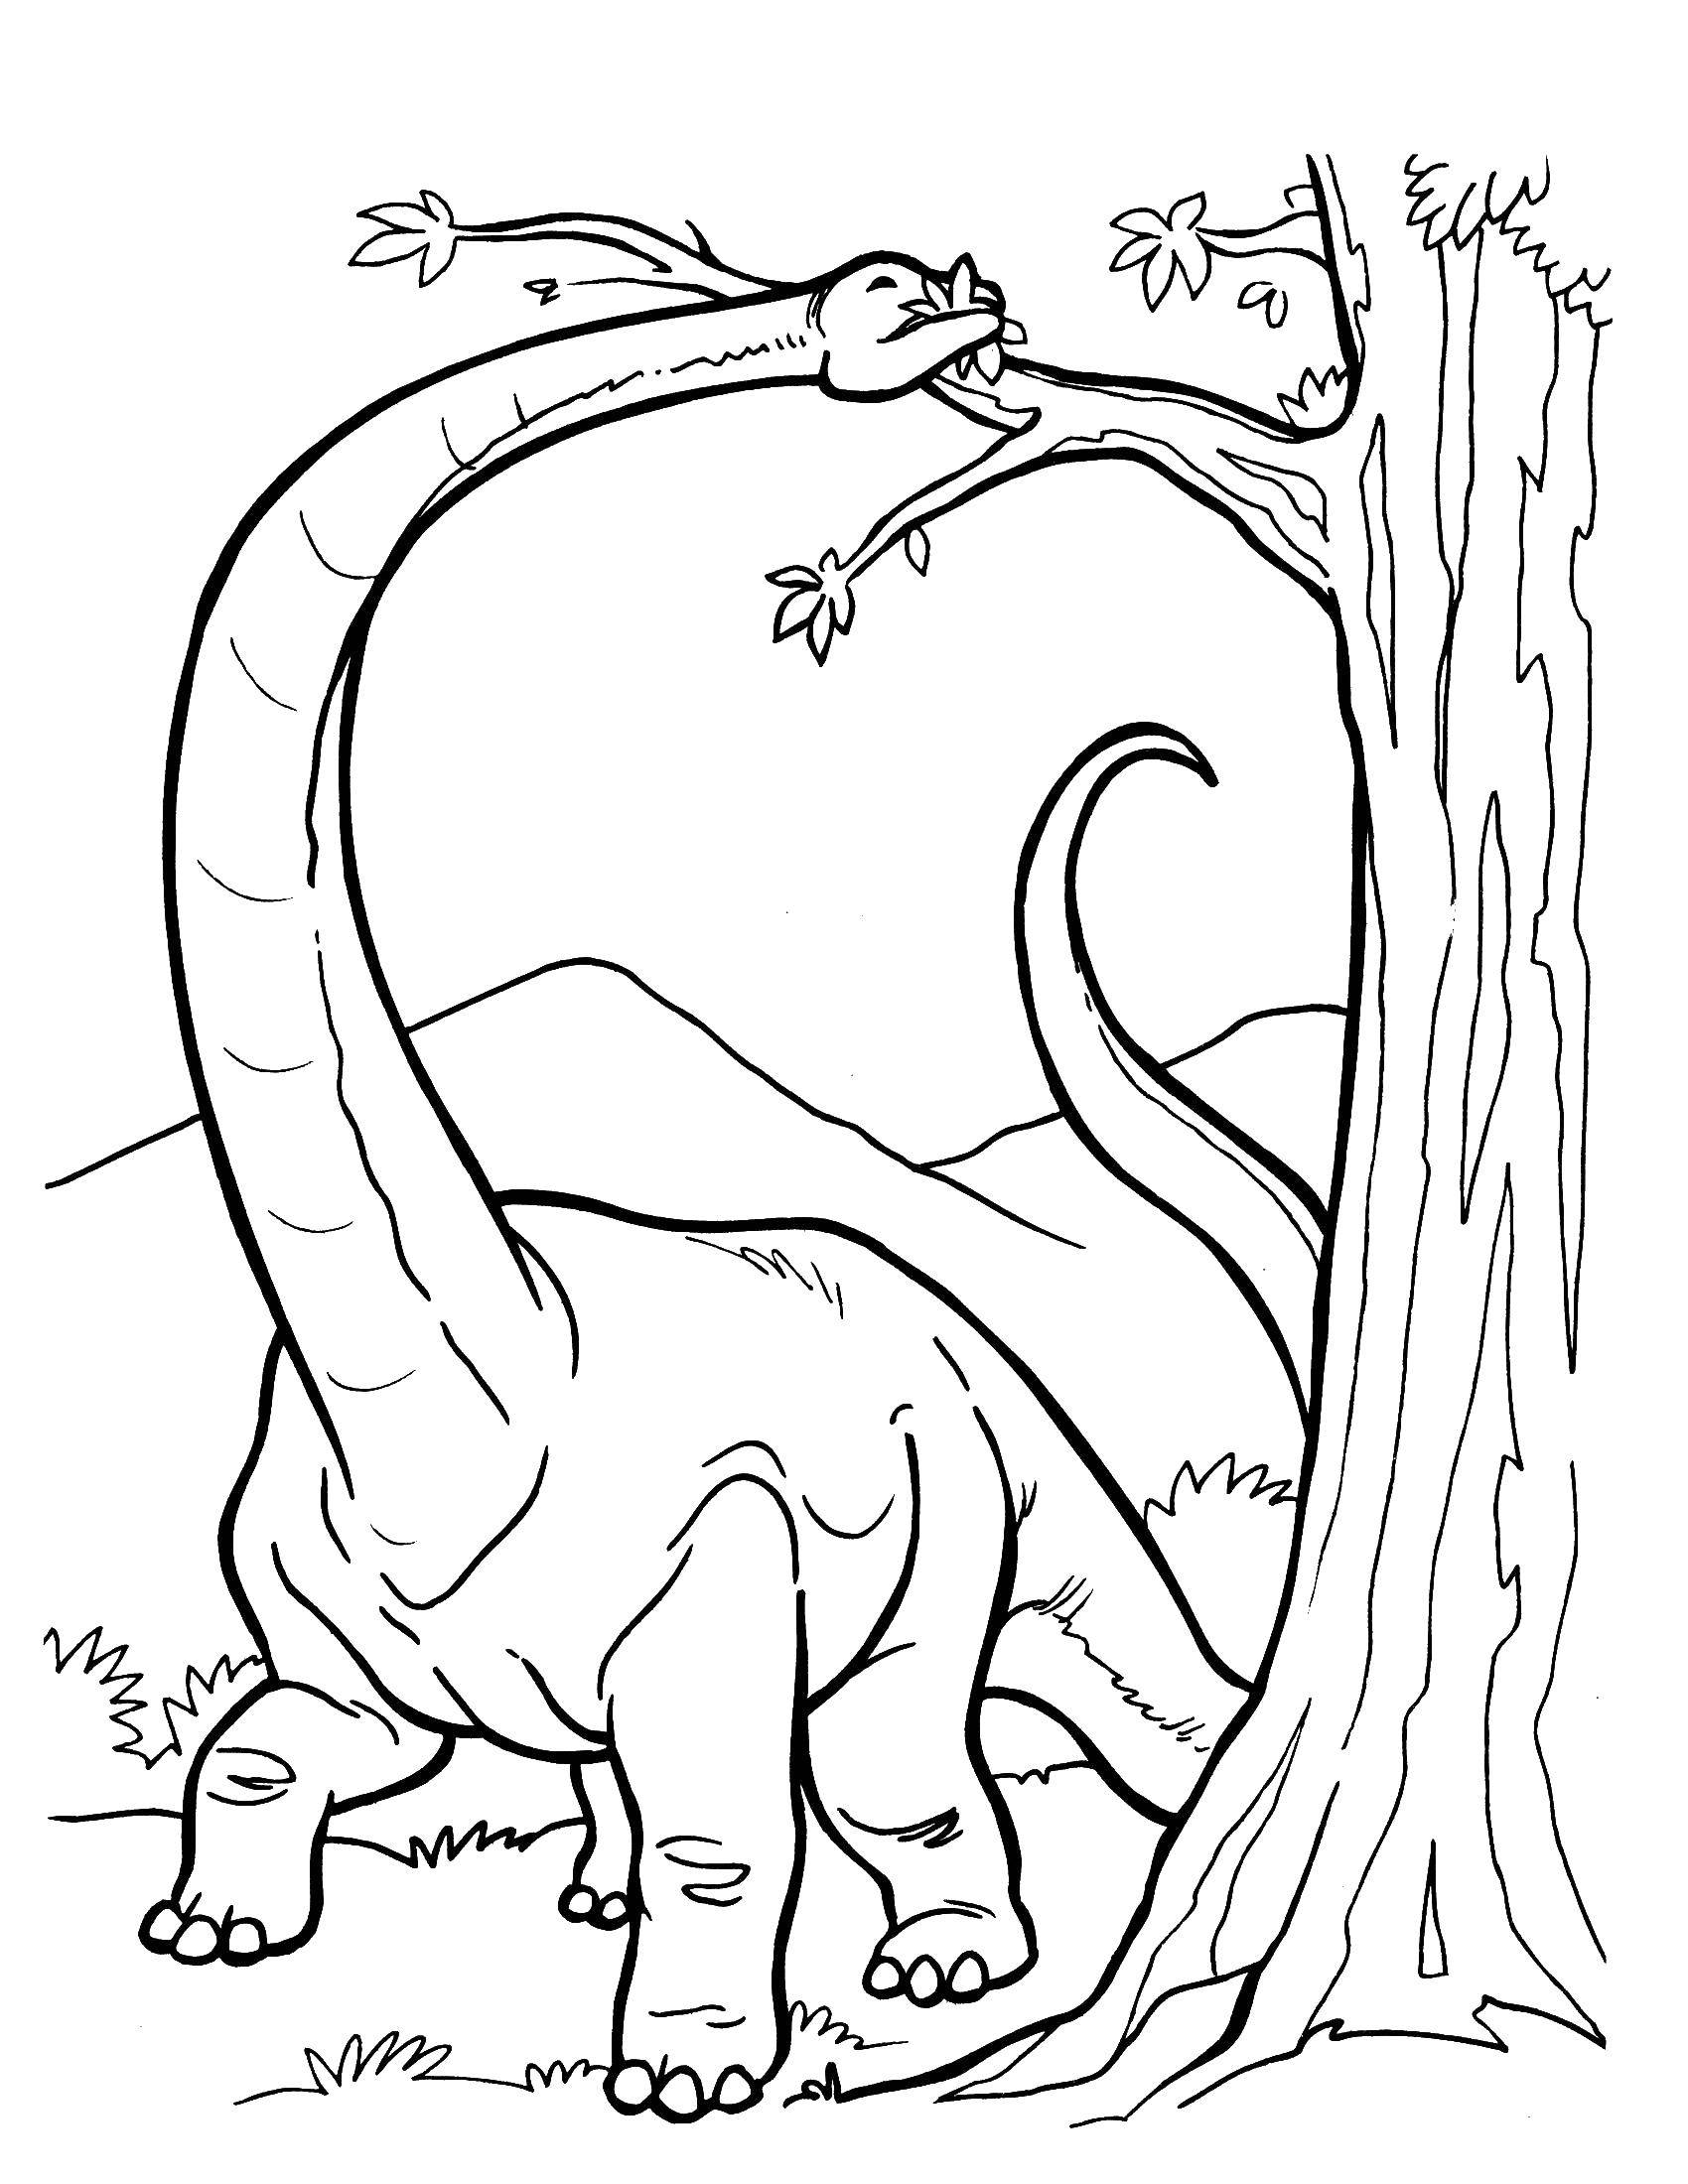 Coloring Apatosaurus eat leaves. Category dinosaur. Tags:  Dinosaurs.